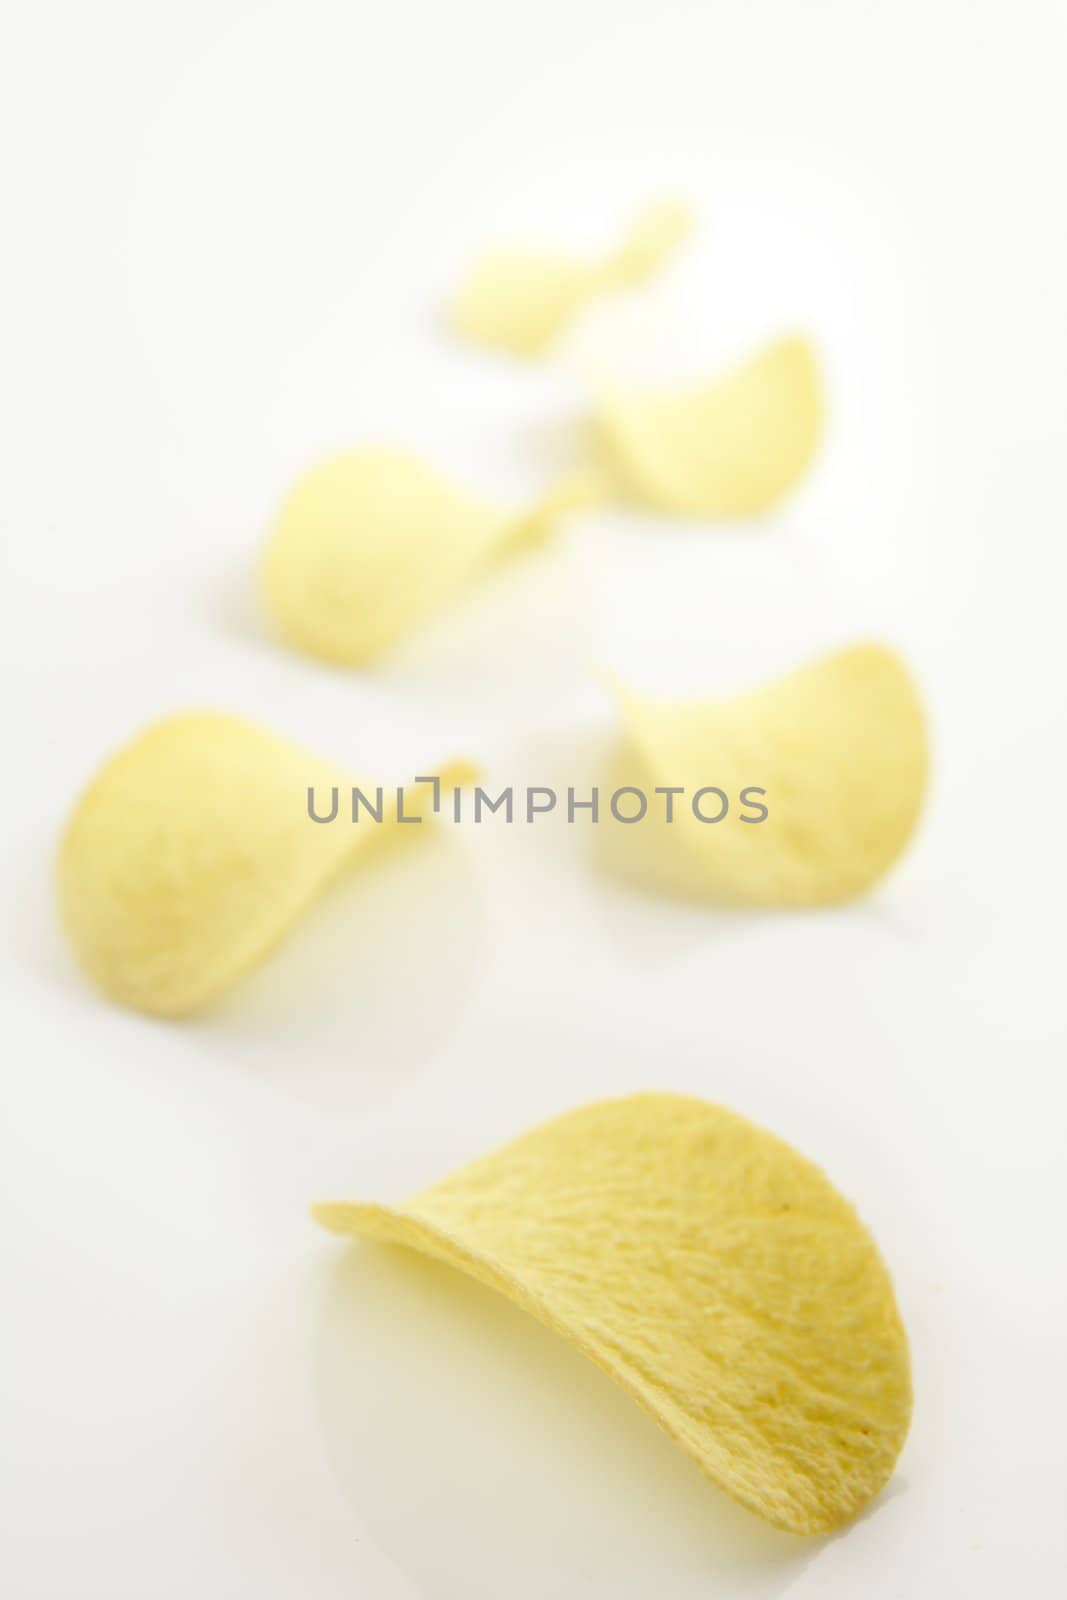 Potato salted chips slices by lunamarina